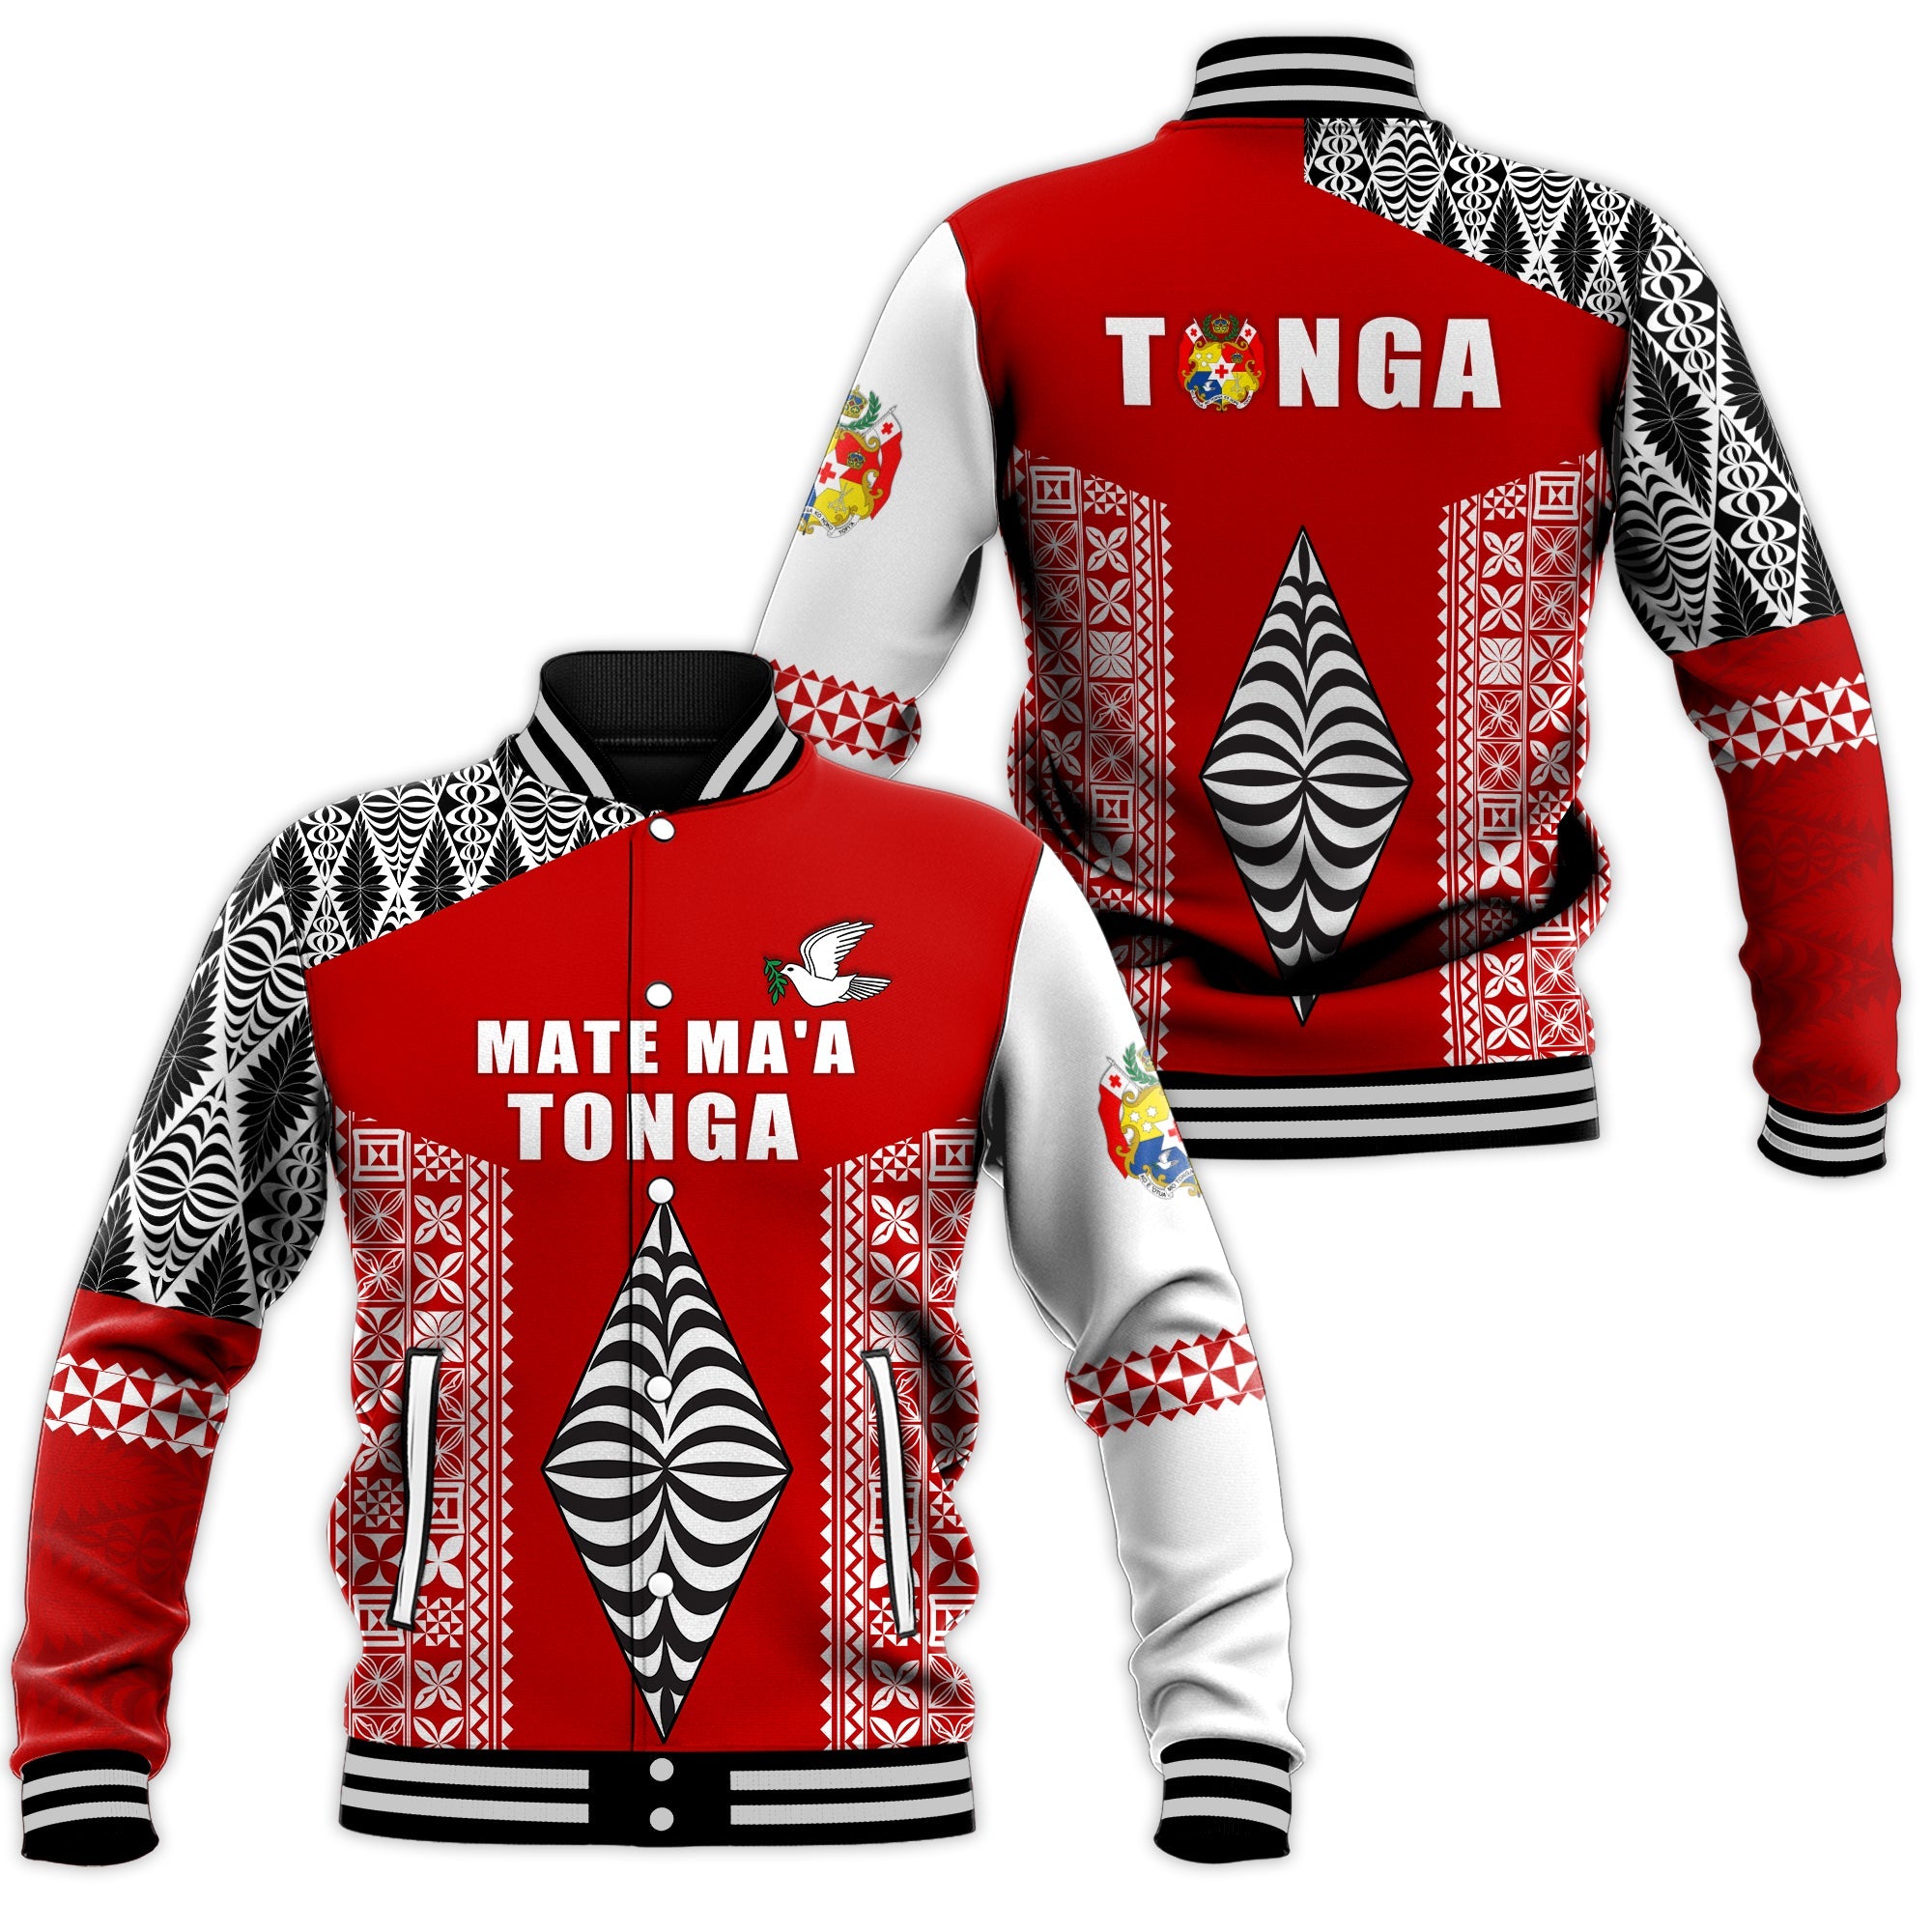 Tonga Rugby Baseball Jacket - Mate Ma'a Tonga LT13 Unisex Red - Polynesian Pride